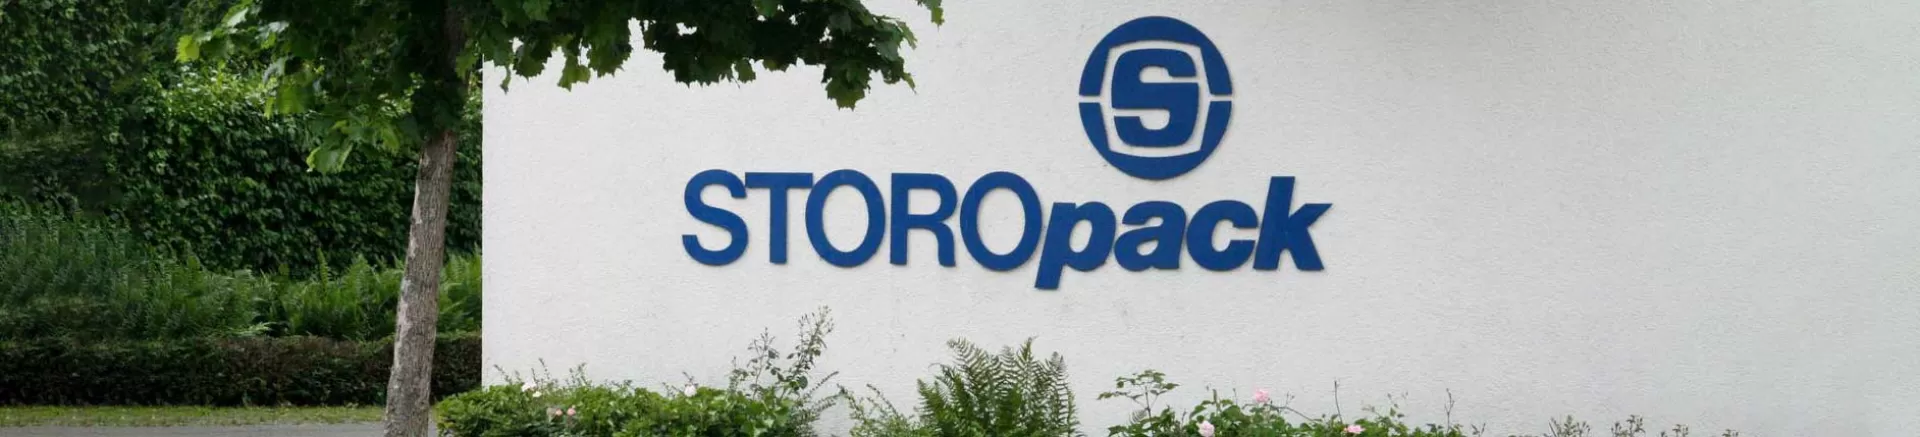 Storopack - Firmenzentrale